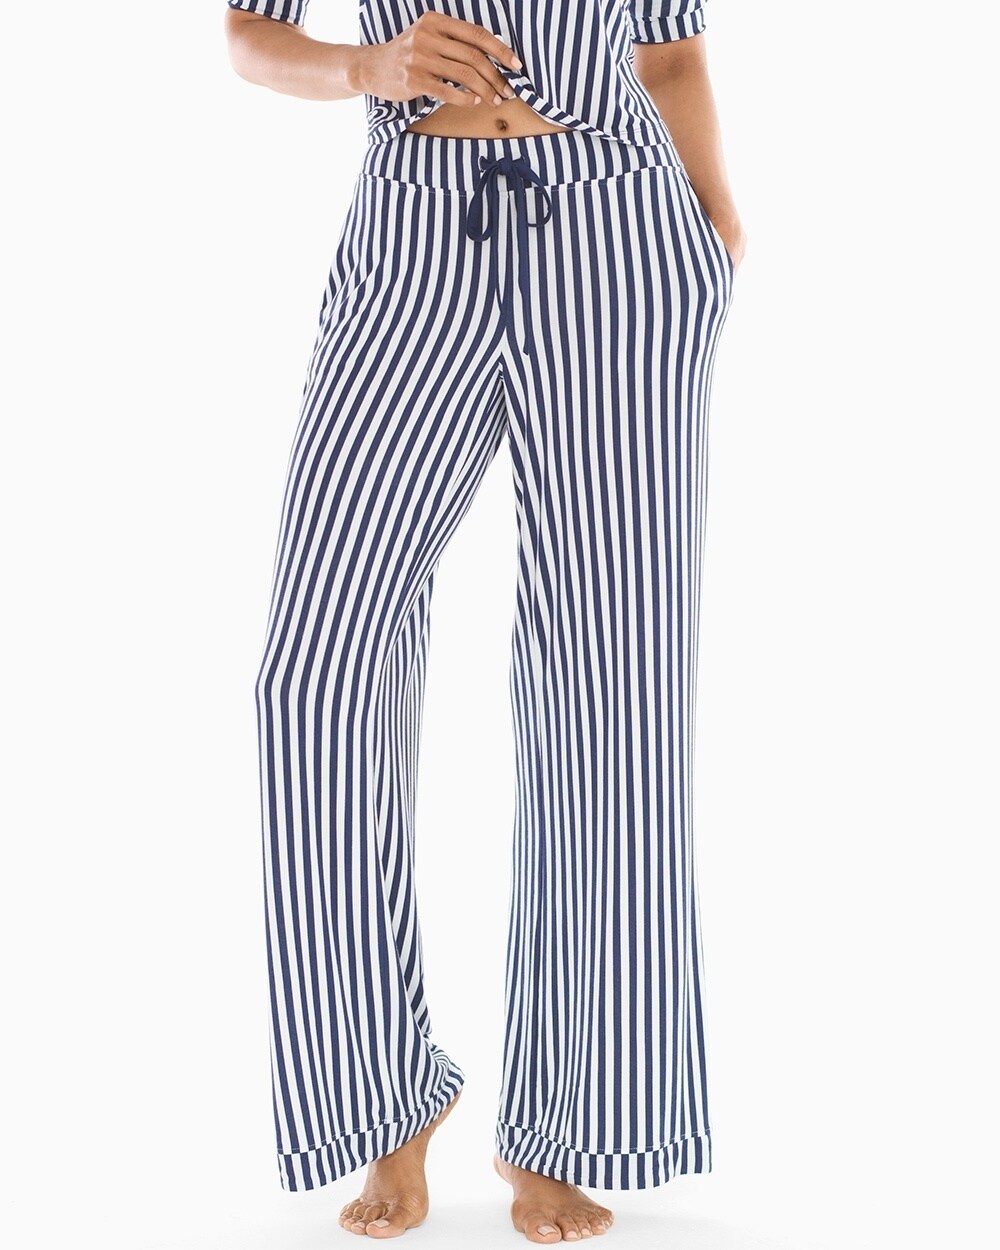 Cool Nights Pajama Pants Poised Stripe Navy